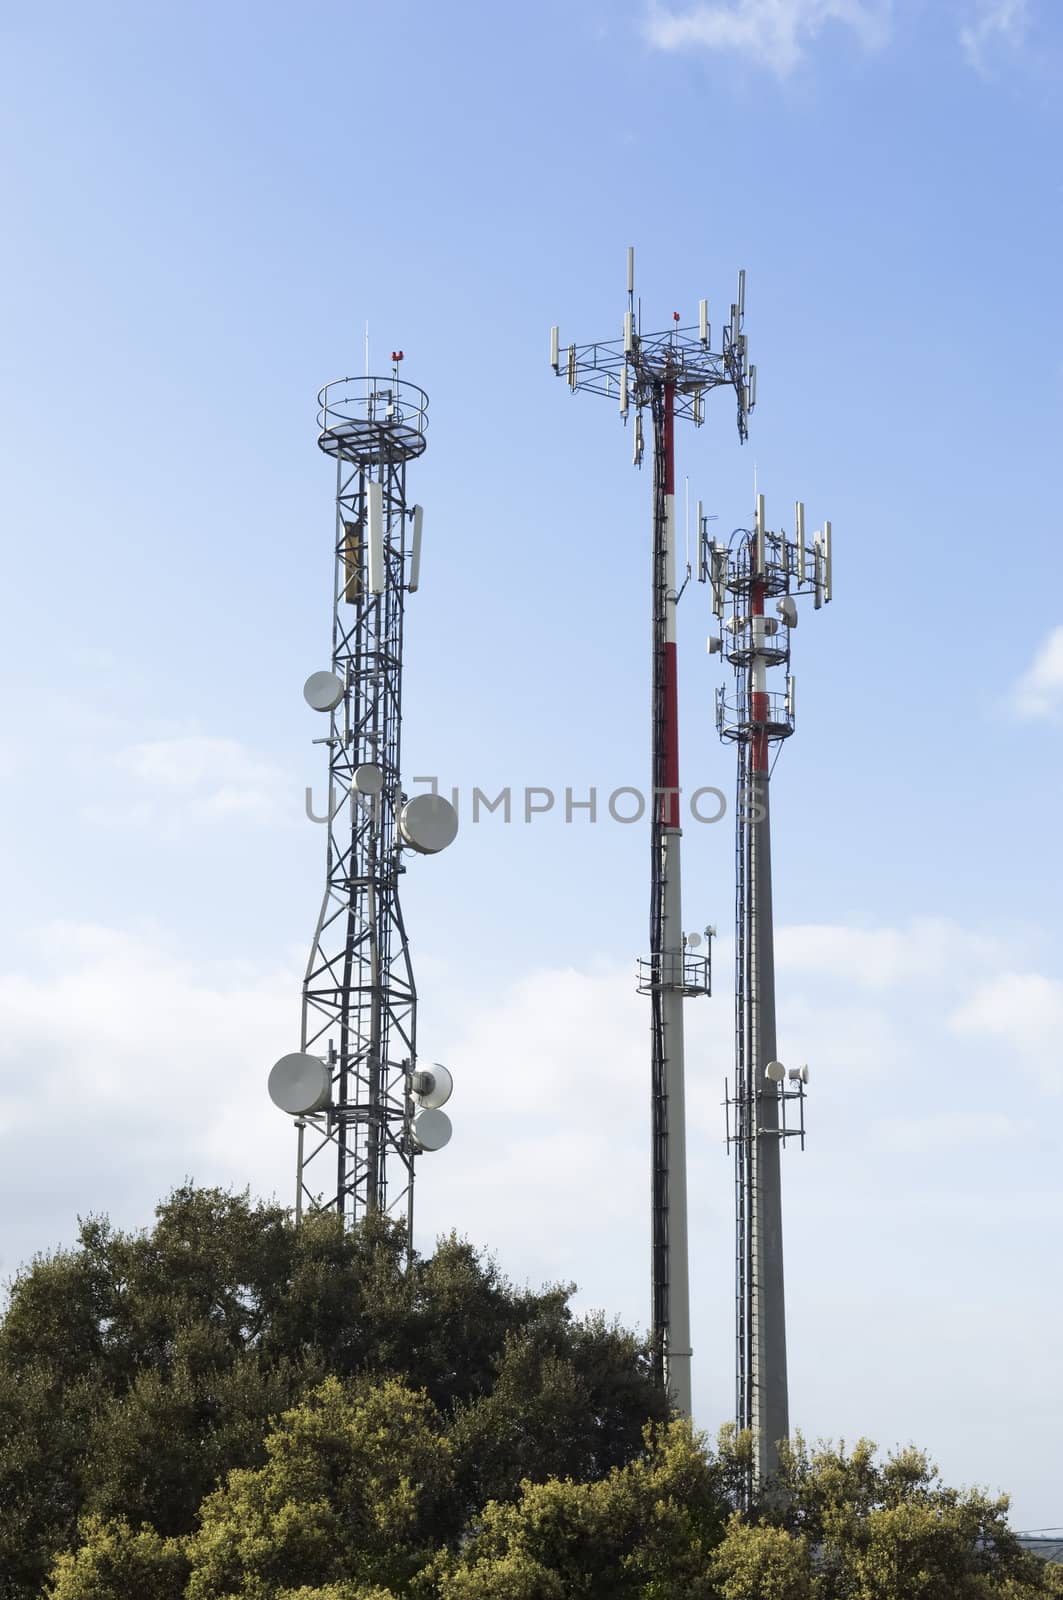 Three telecommunication antennas against a clear blue sky
